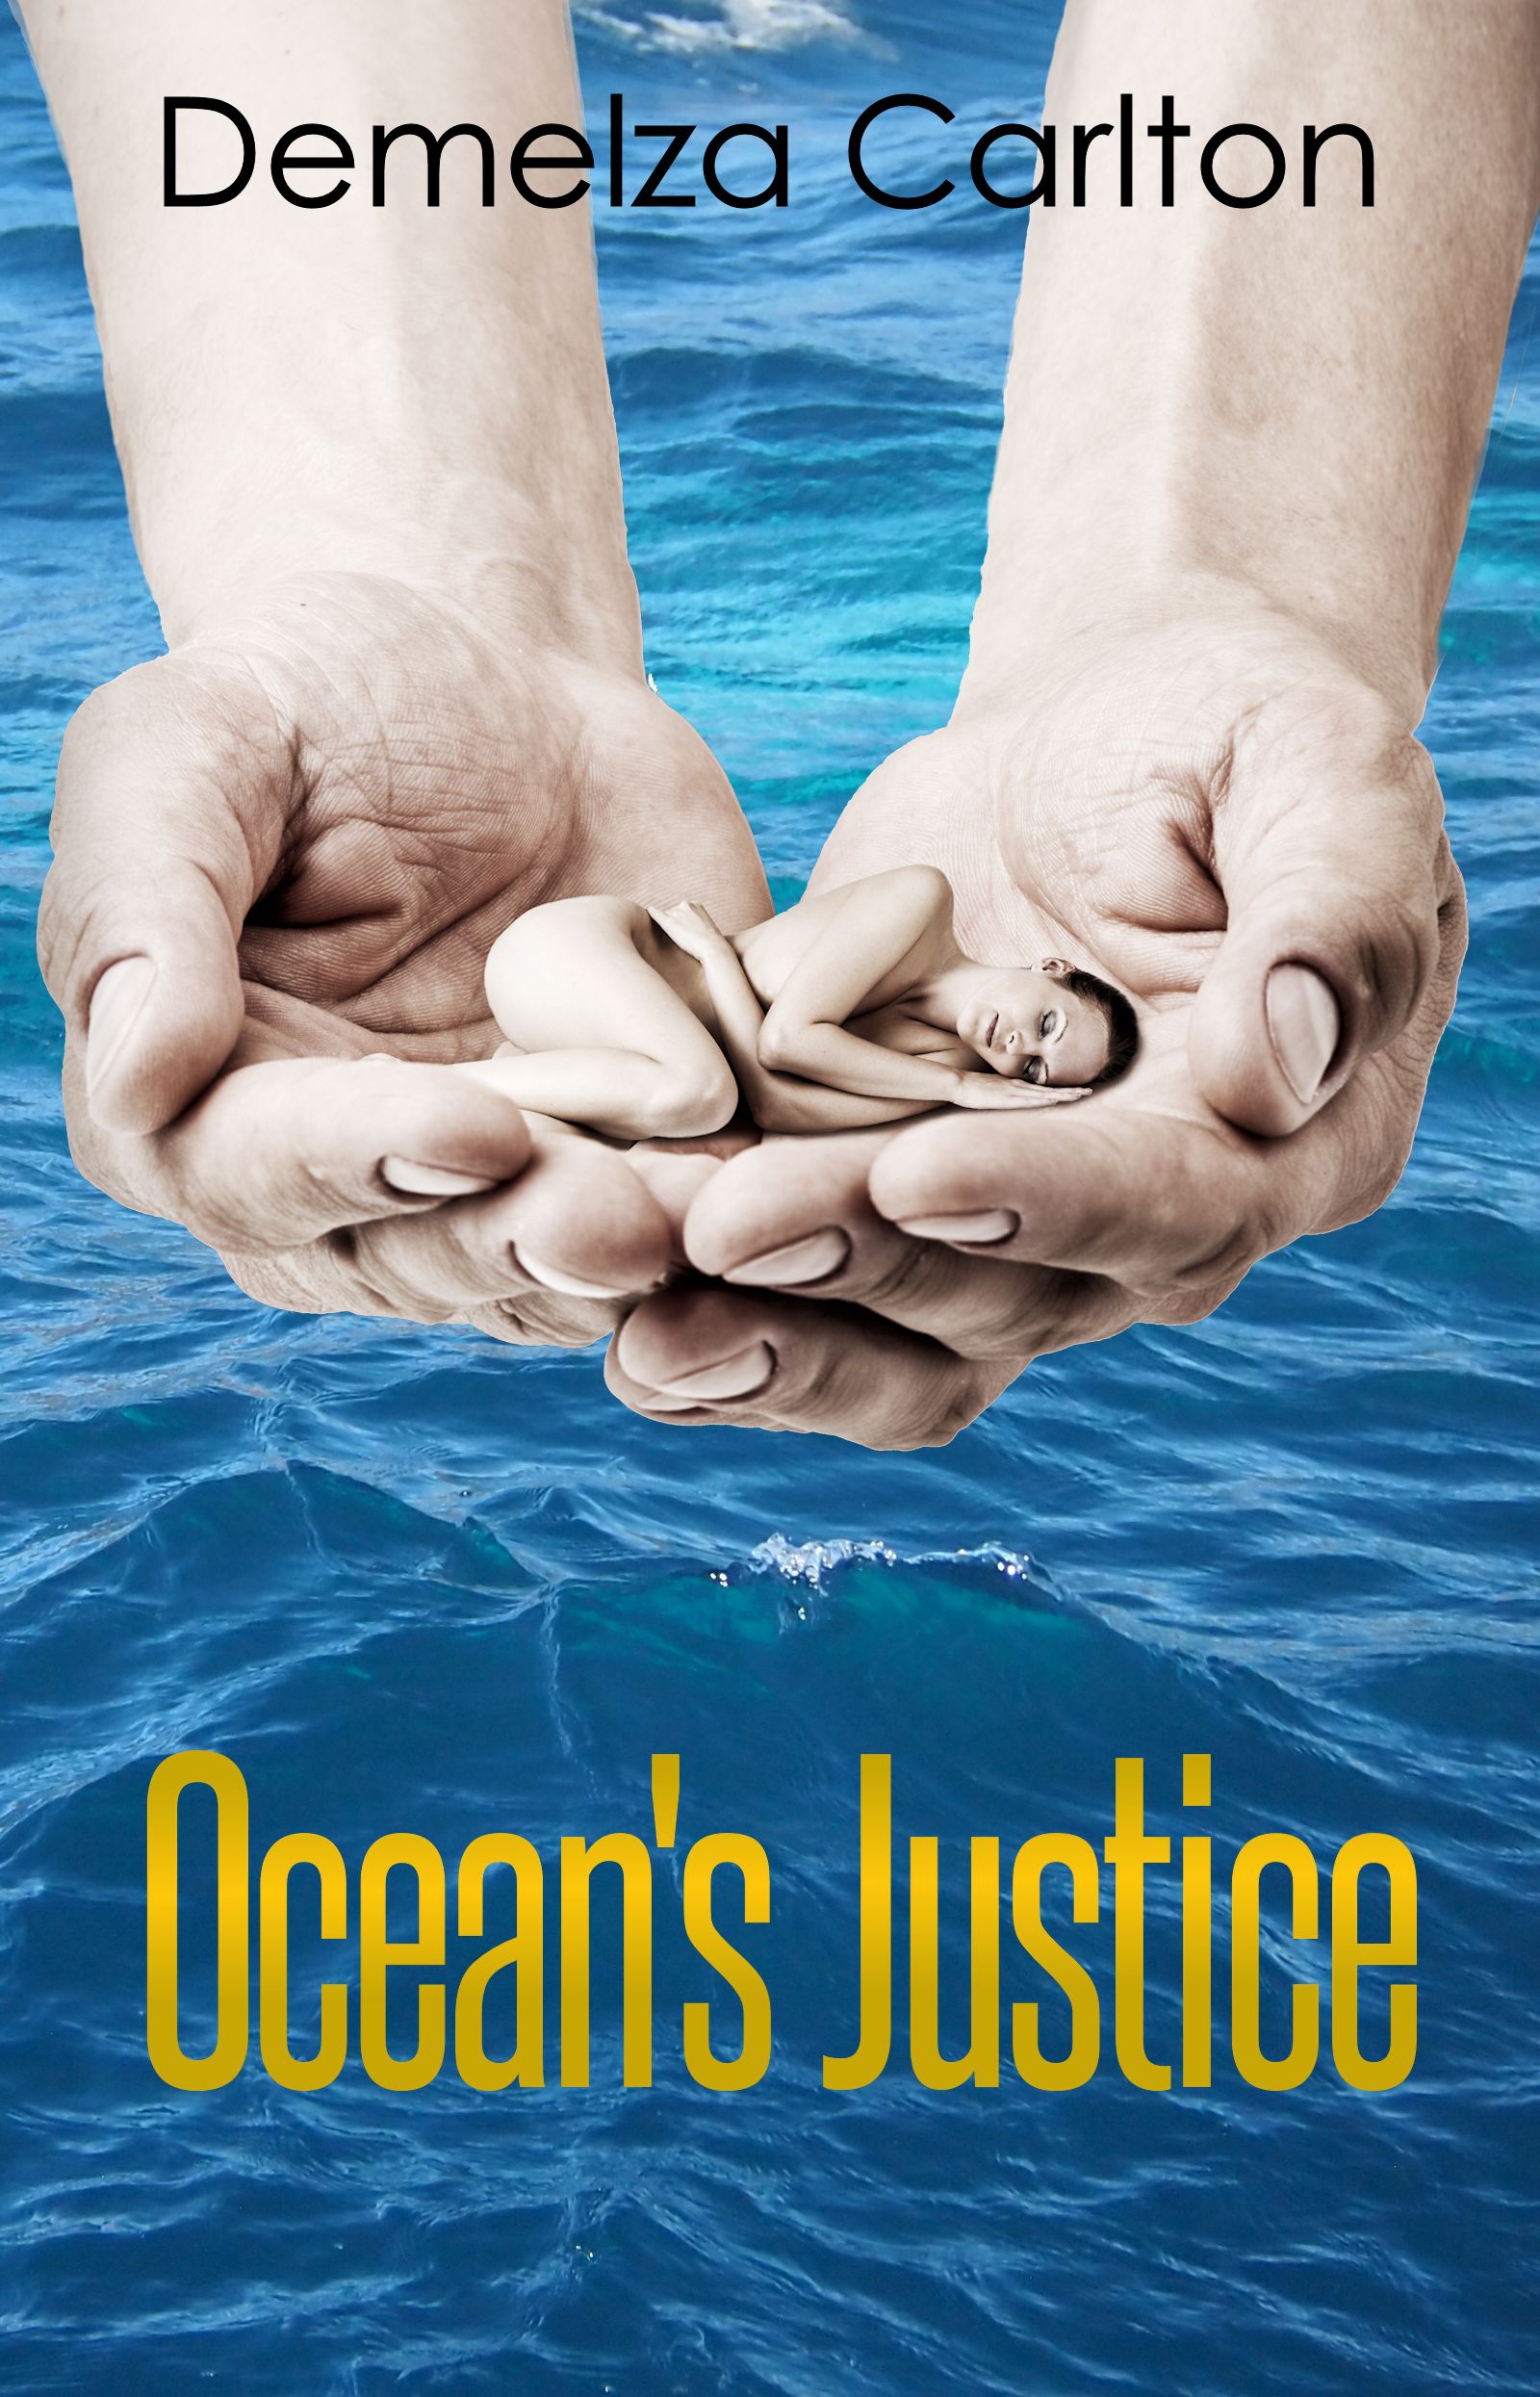 Ocean's Justice (2014) by Demelza Carlton